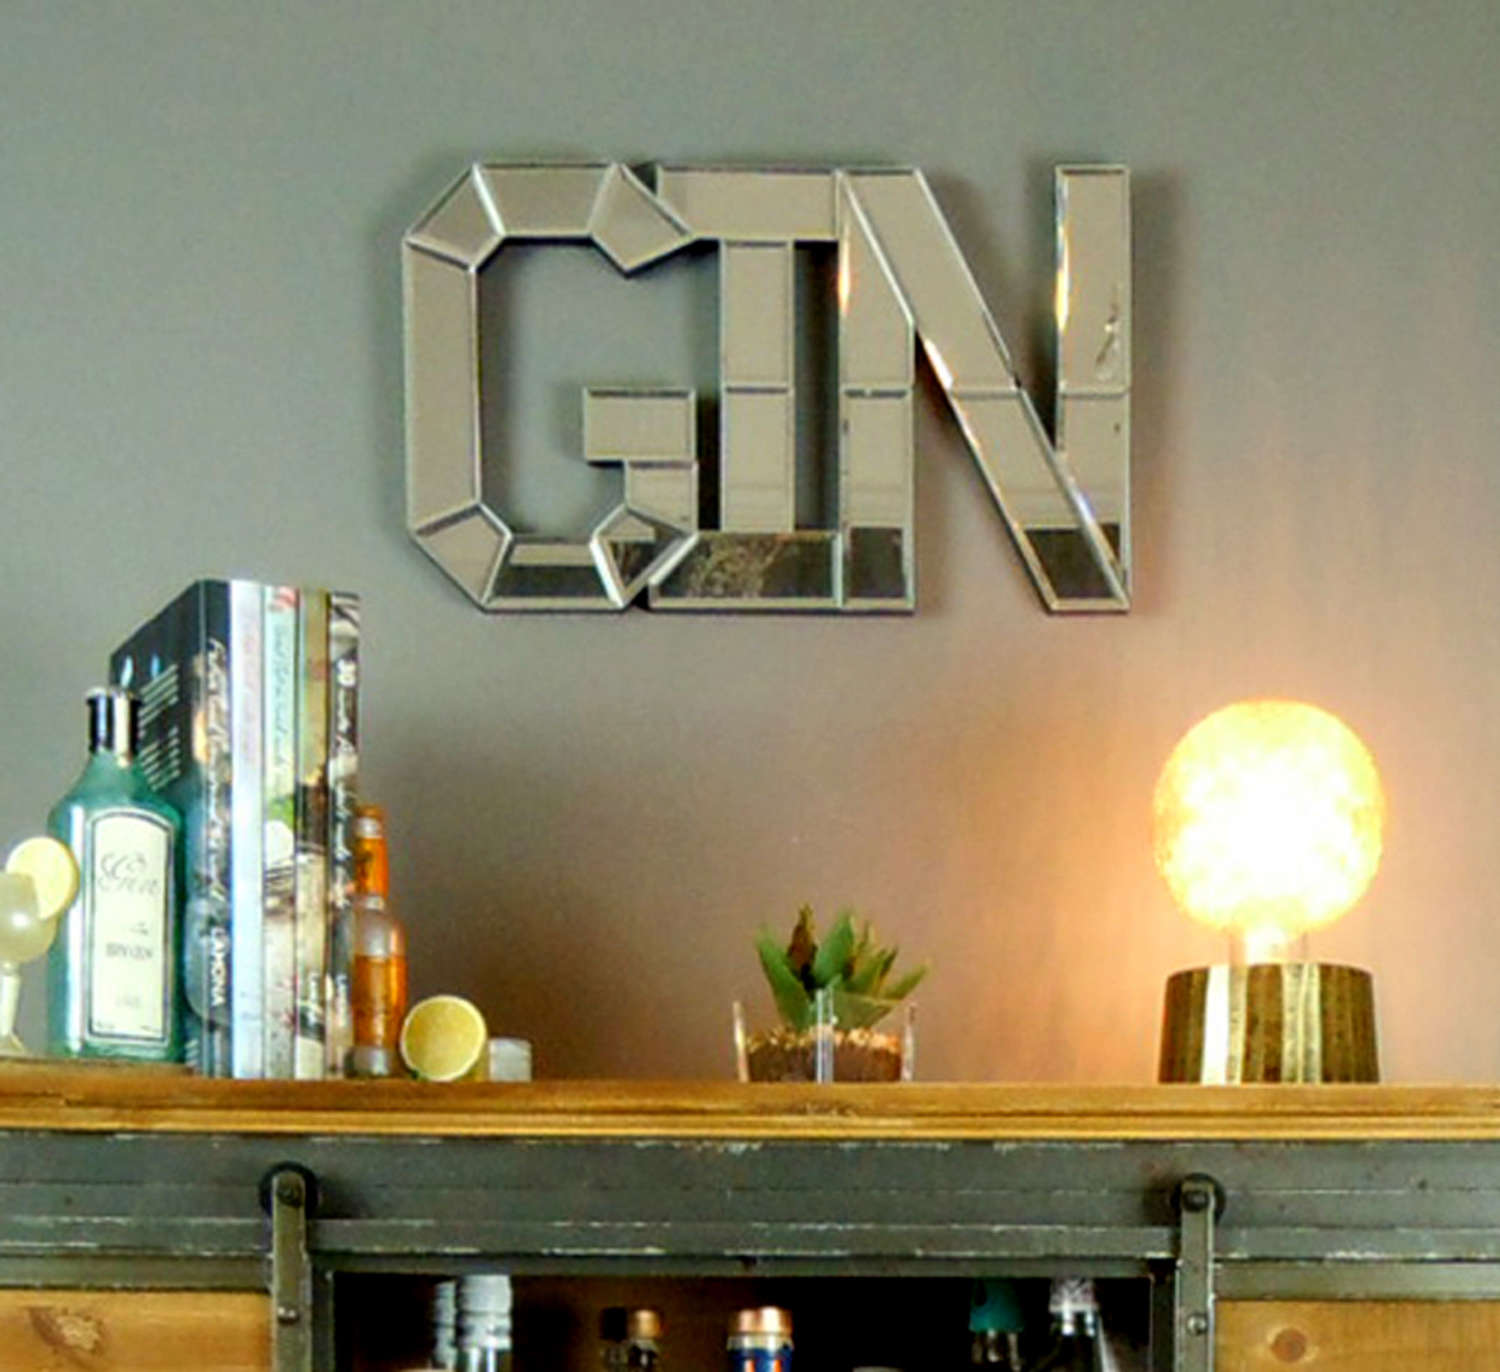 Gin wall art mirror